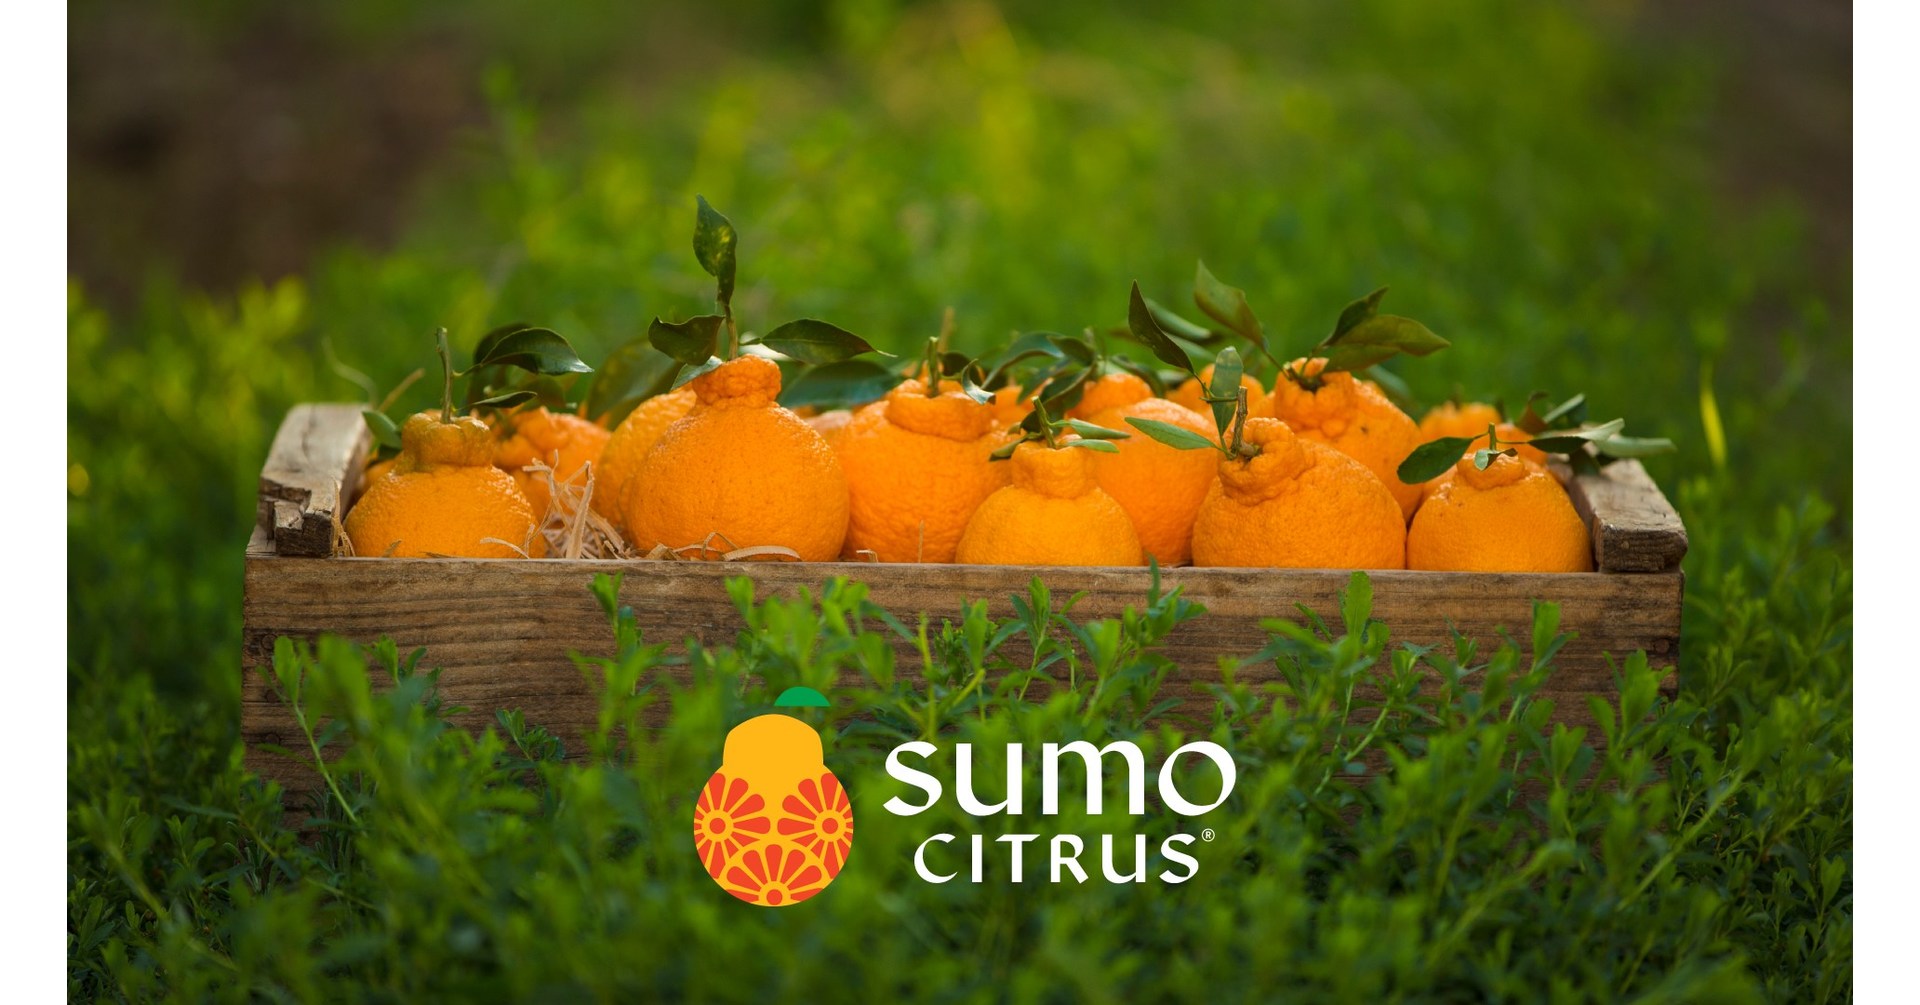 https://mma.prnewswire.com/media/1041787/Sumo_Citrus.jpg?p=facebook